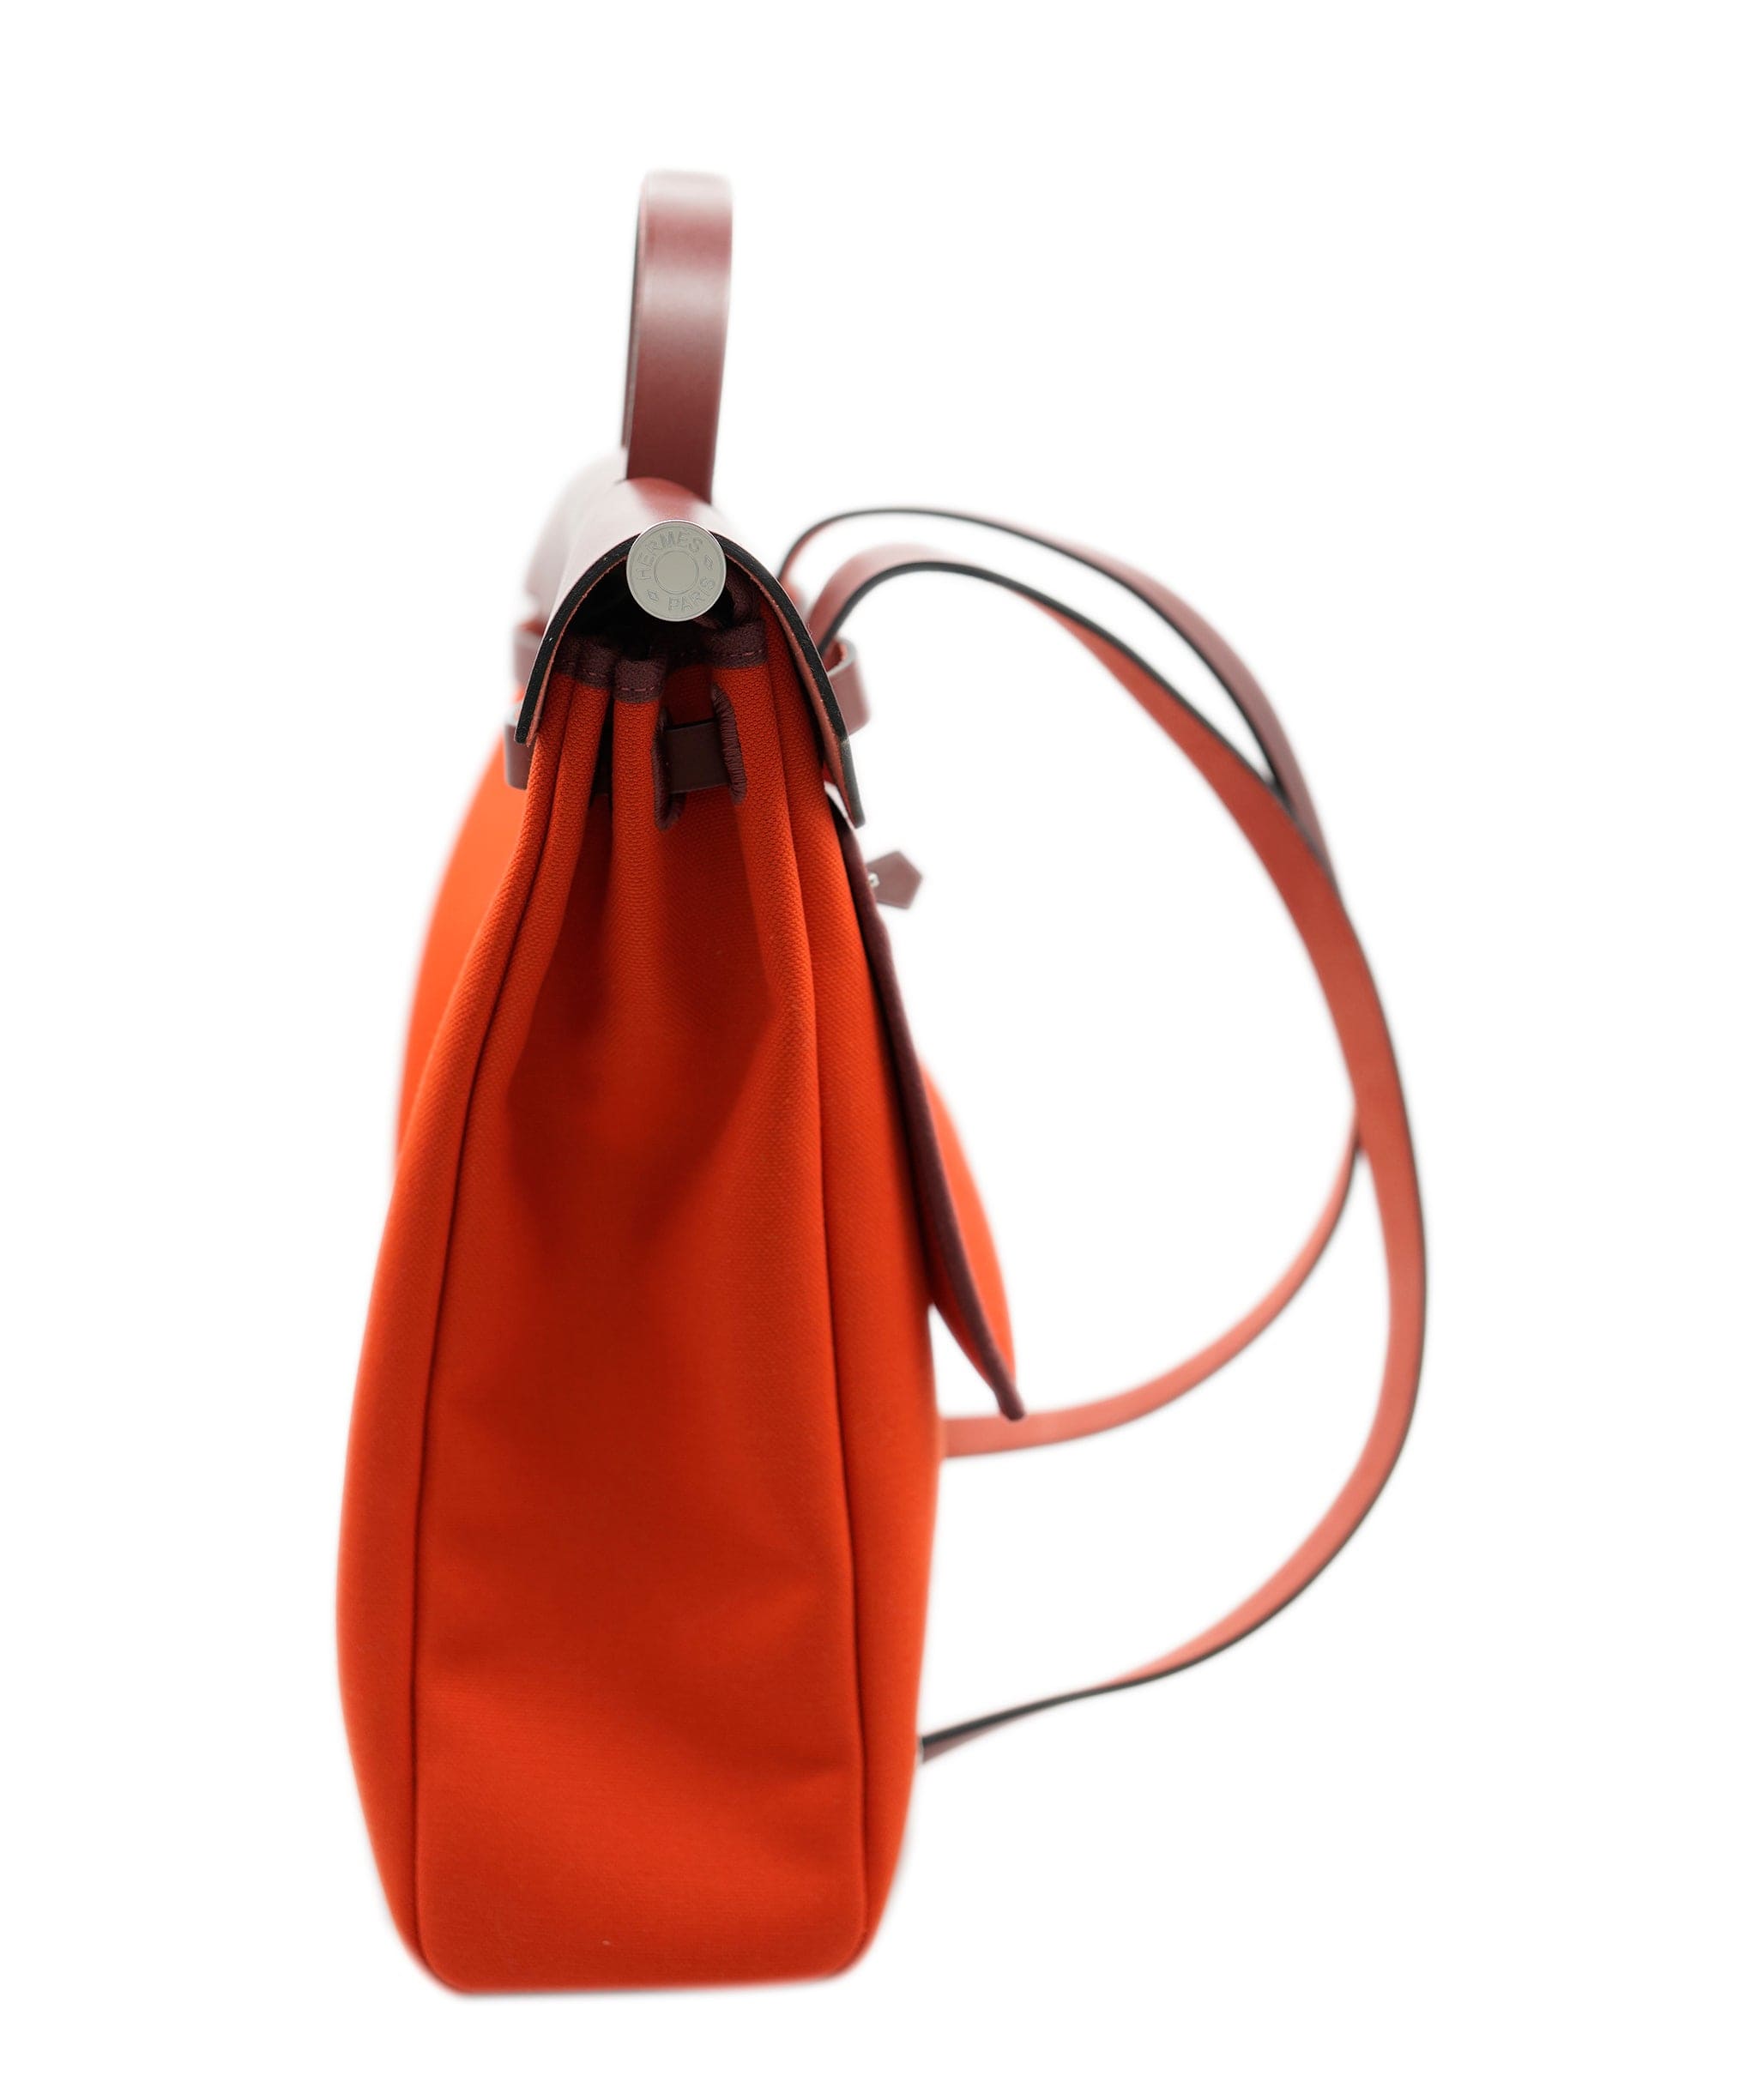 Hermès Hermes Herbag backpack, red, full set - AEC1070